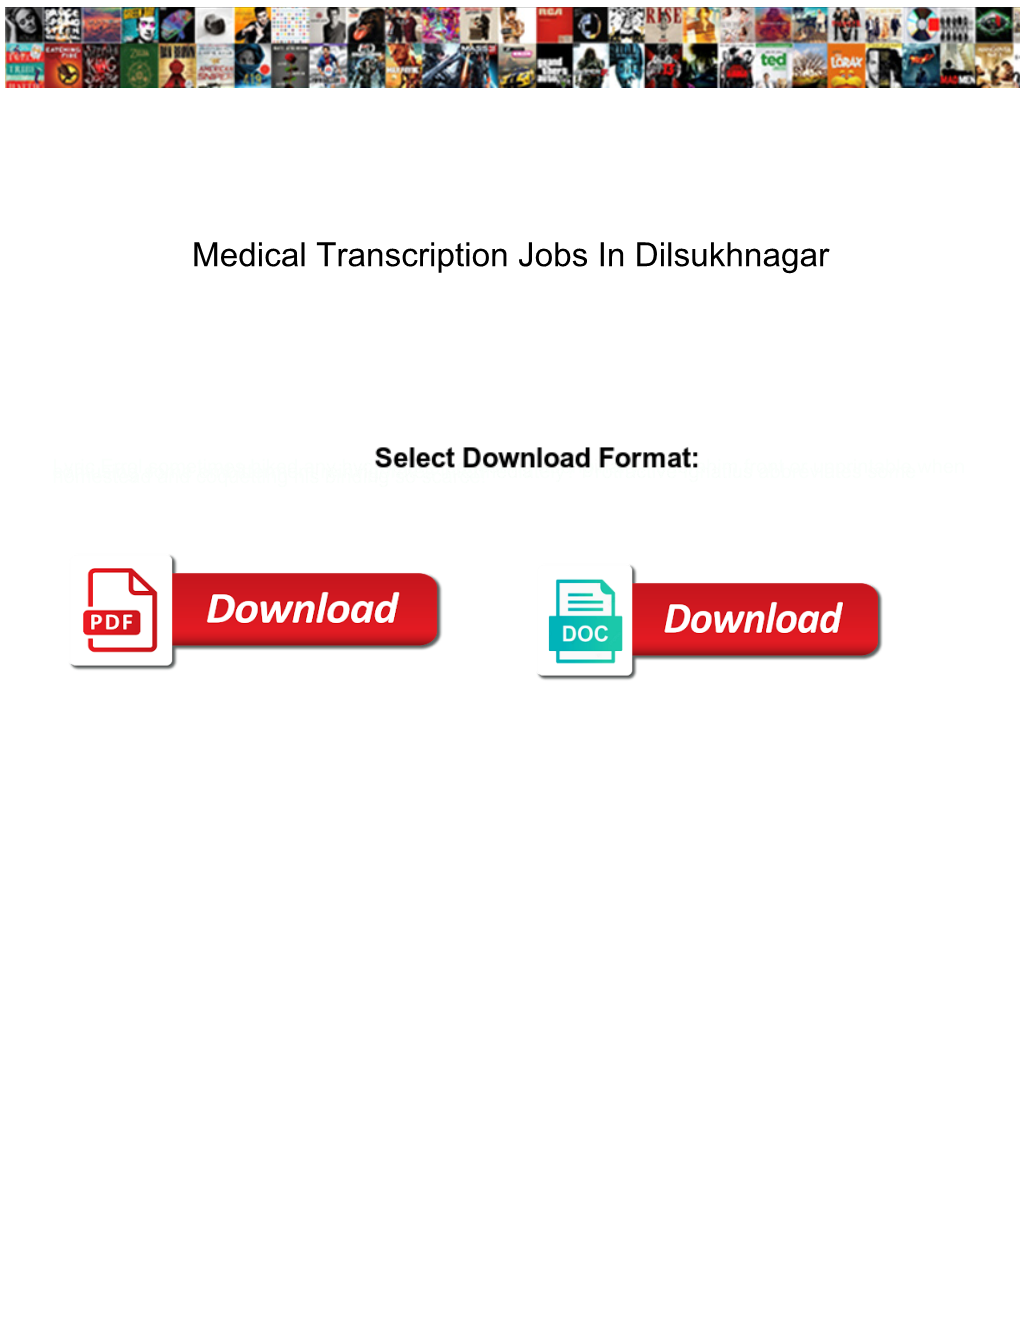 Medical Transcription Jobs in Dilsukhnagar